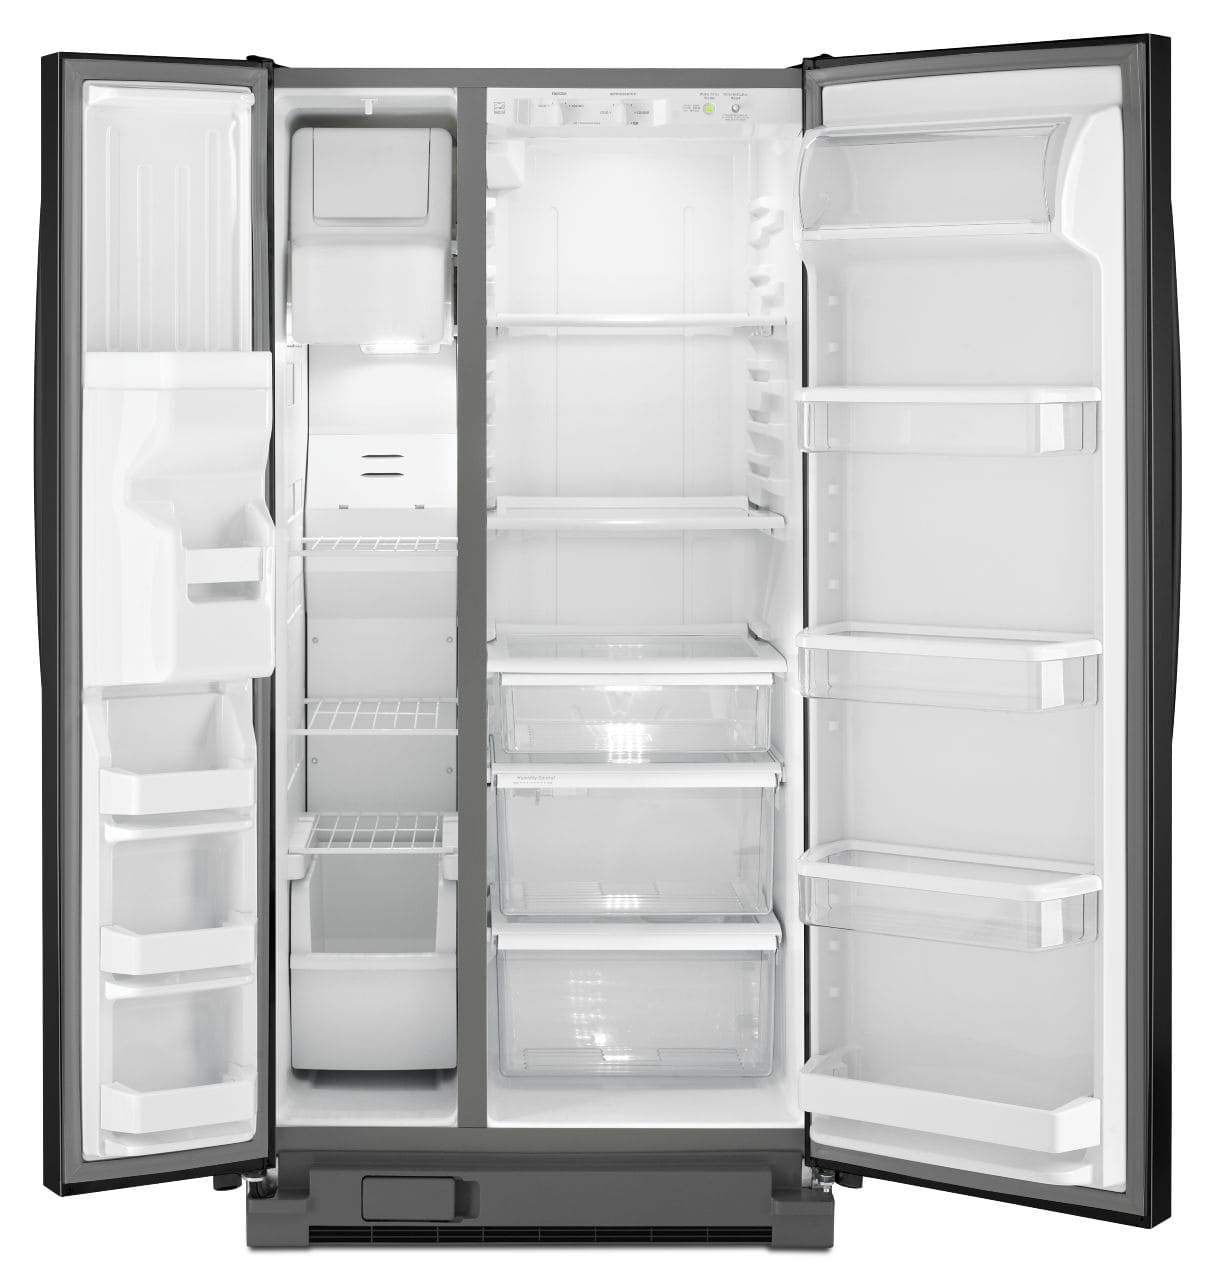 Whirlpool Full Size Refrigerators, Whirlpool Refrigerator Shelves And Drawers